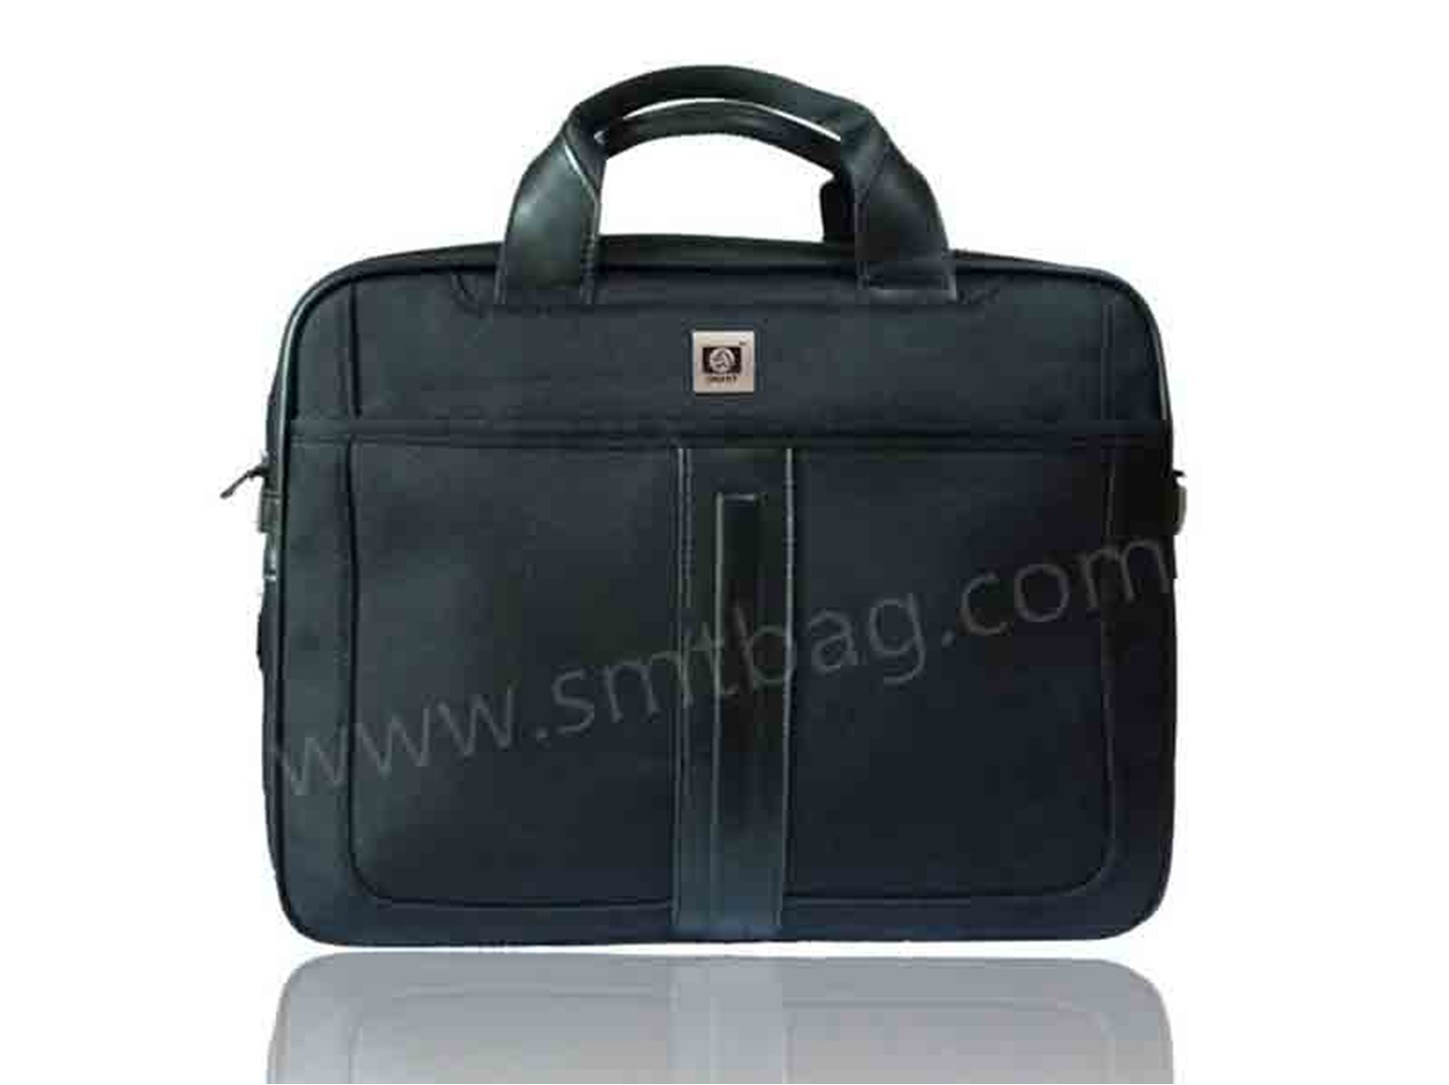 High Quality 1680d Polyster Laptop Bag Handbag (SM8815)